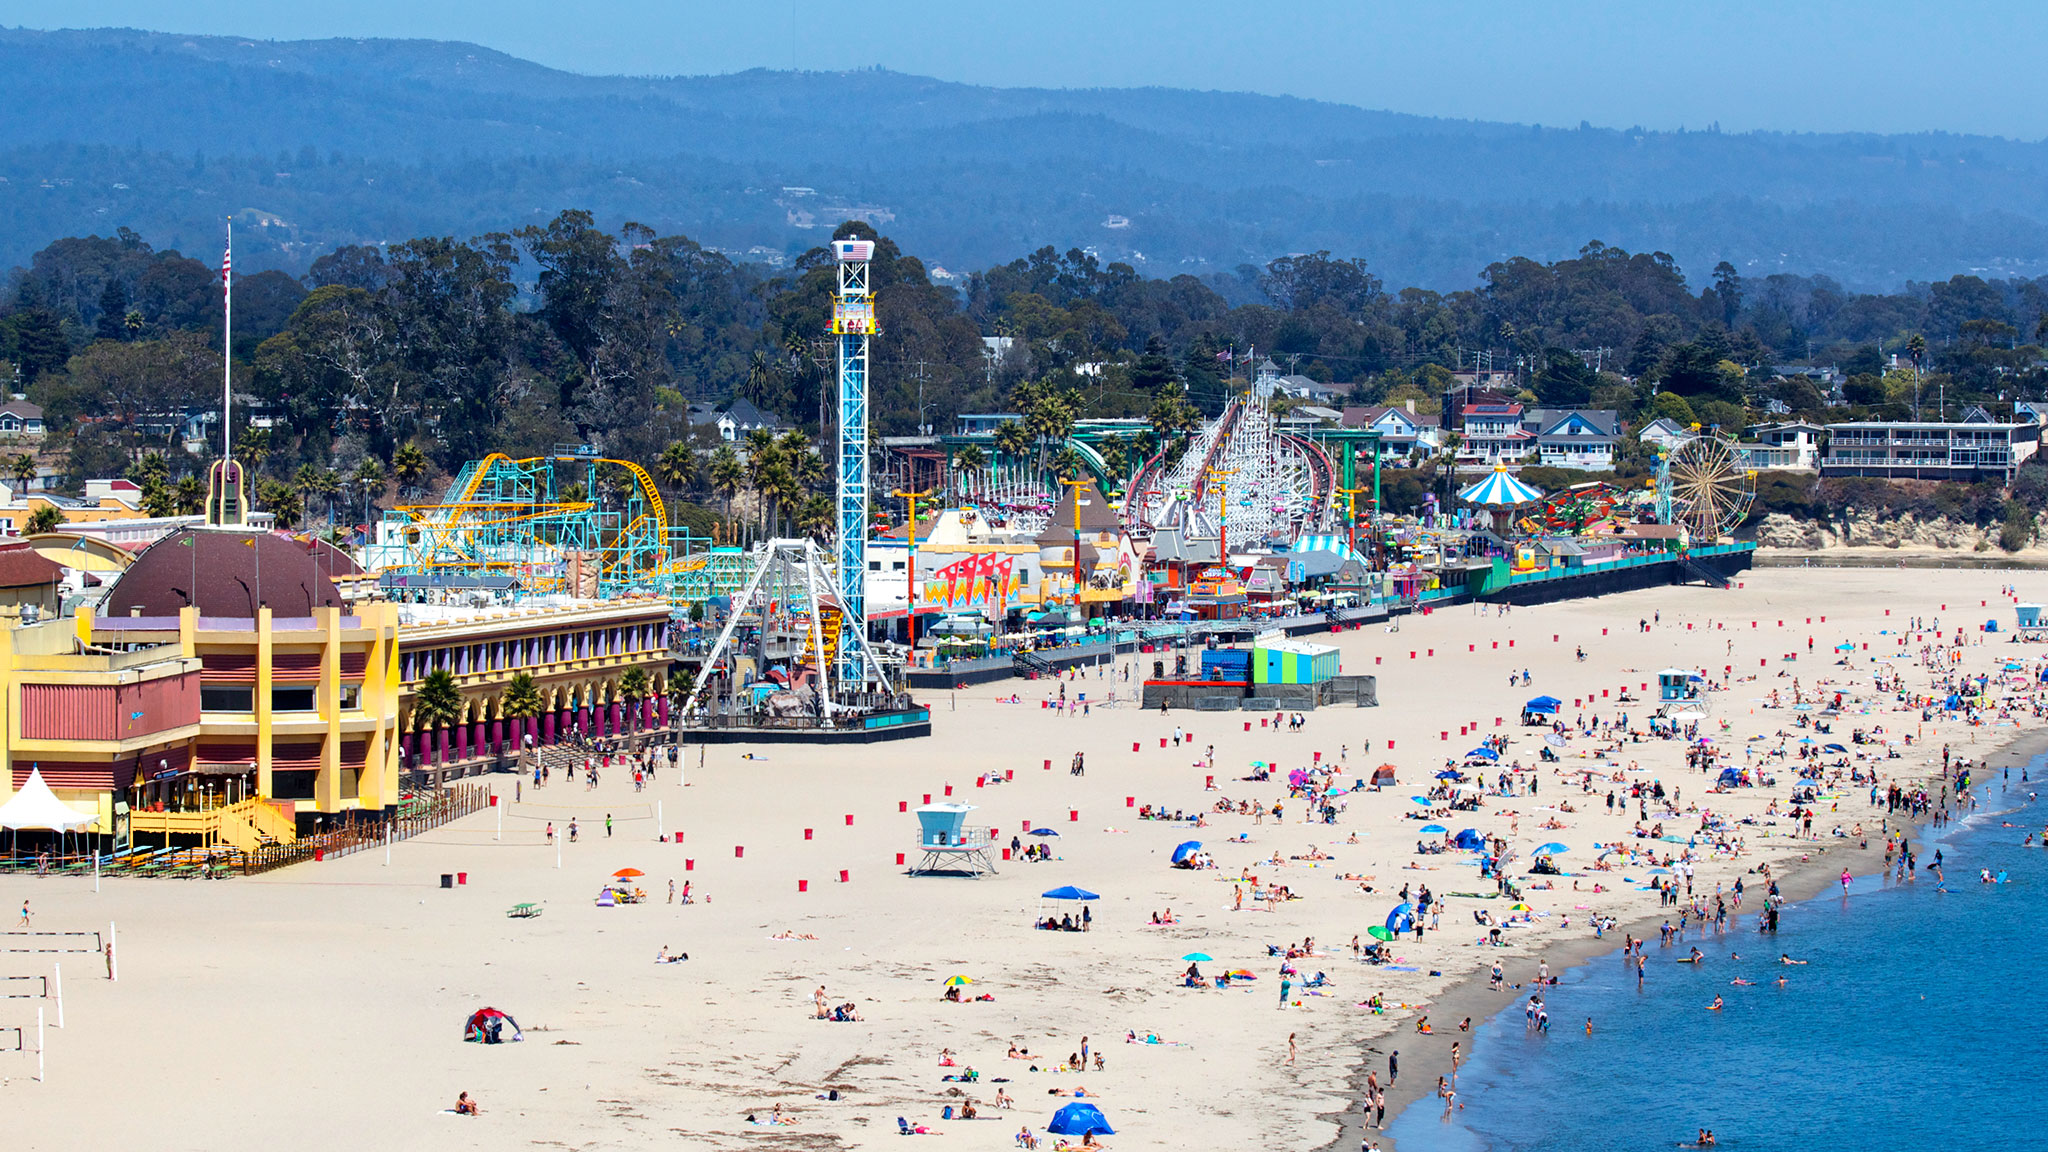 Santa Cruz Beach Boardwalk Events Calendar - Deny Rosamund